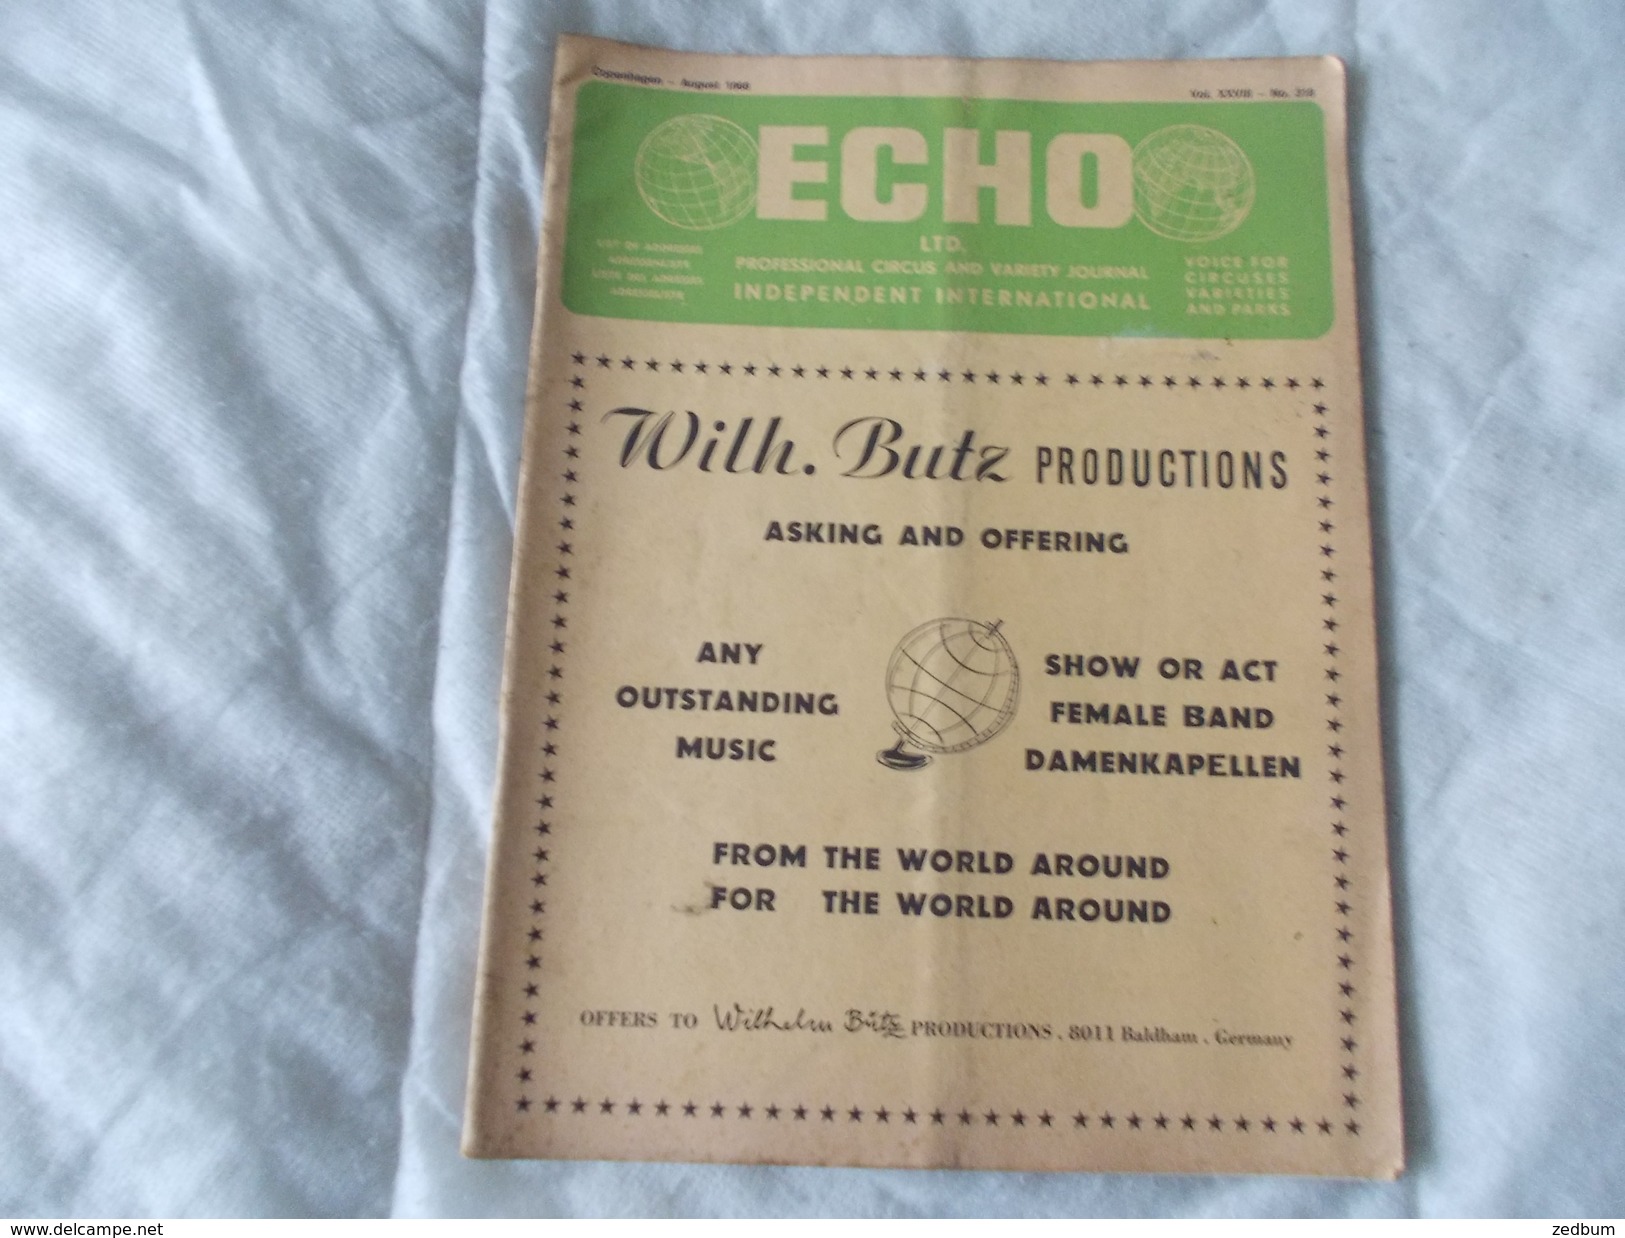 ECHO LTD Professional Circus And Variety Journal Independent International N° 318 August 1968 - Divertissement